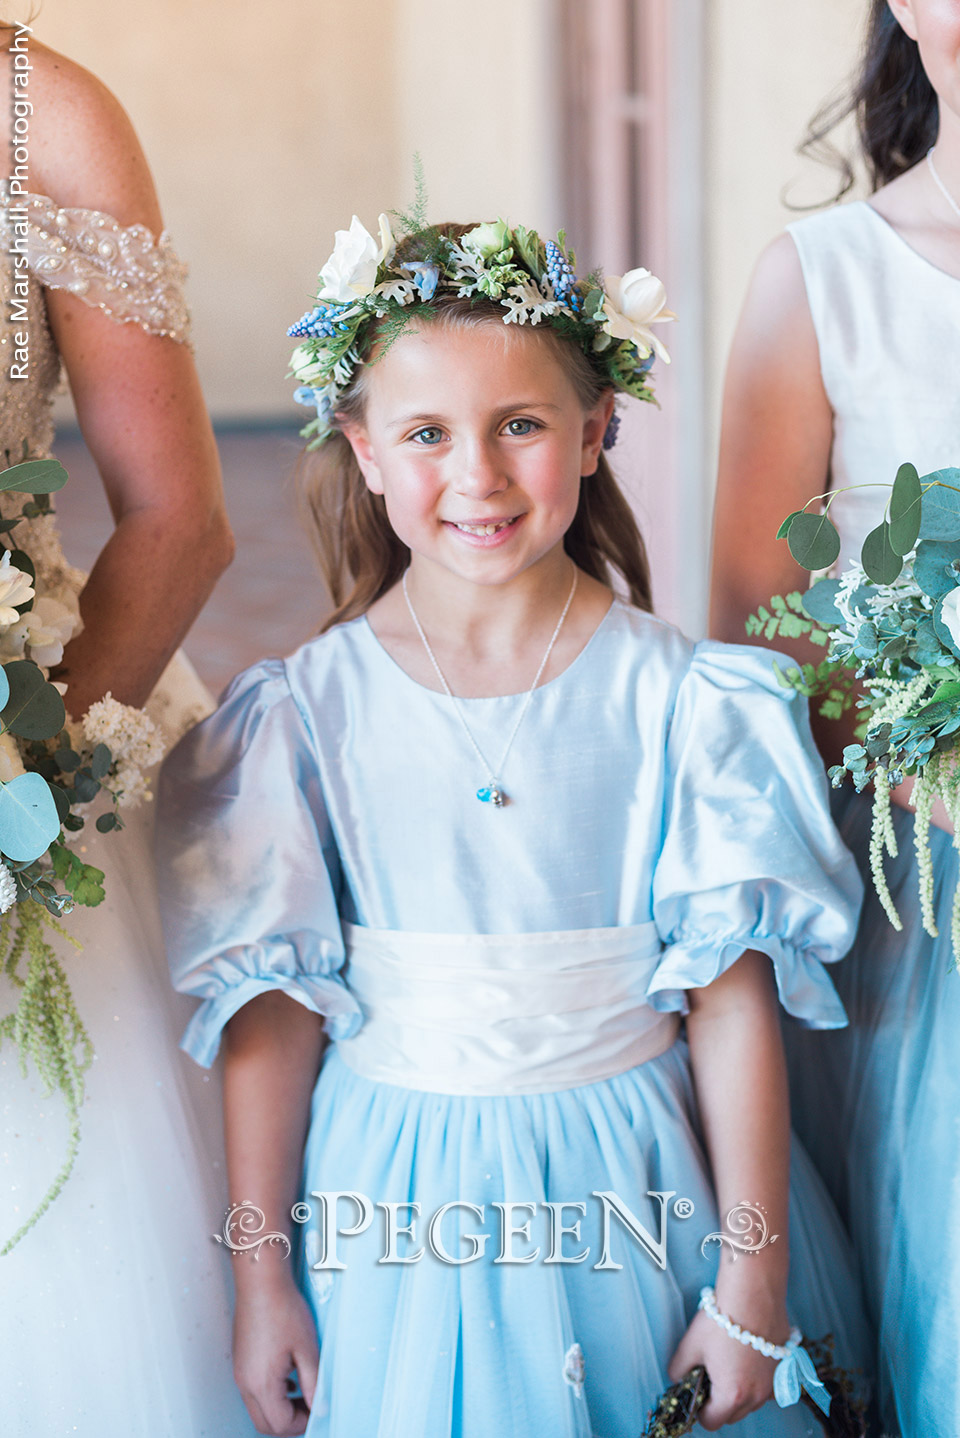 Cloud Blue Sugar Plum Fairy Flower Girl Dress - Style 702